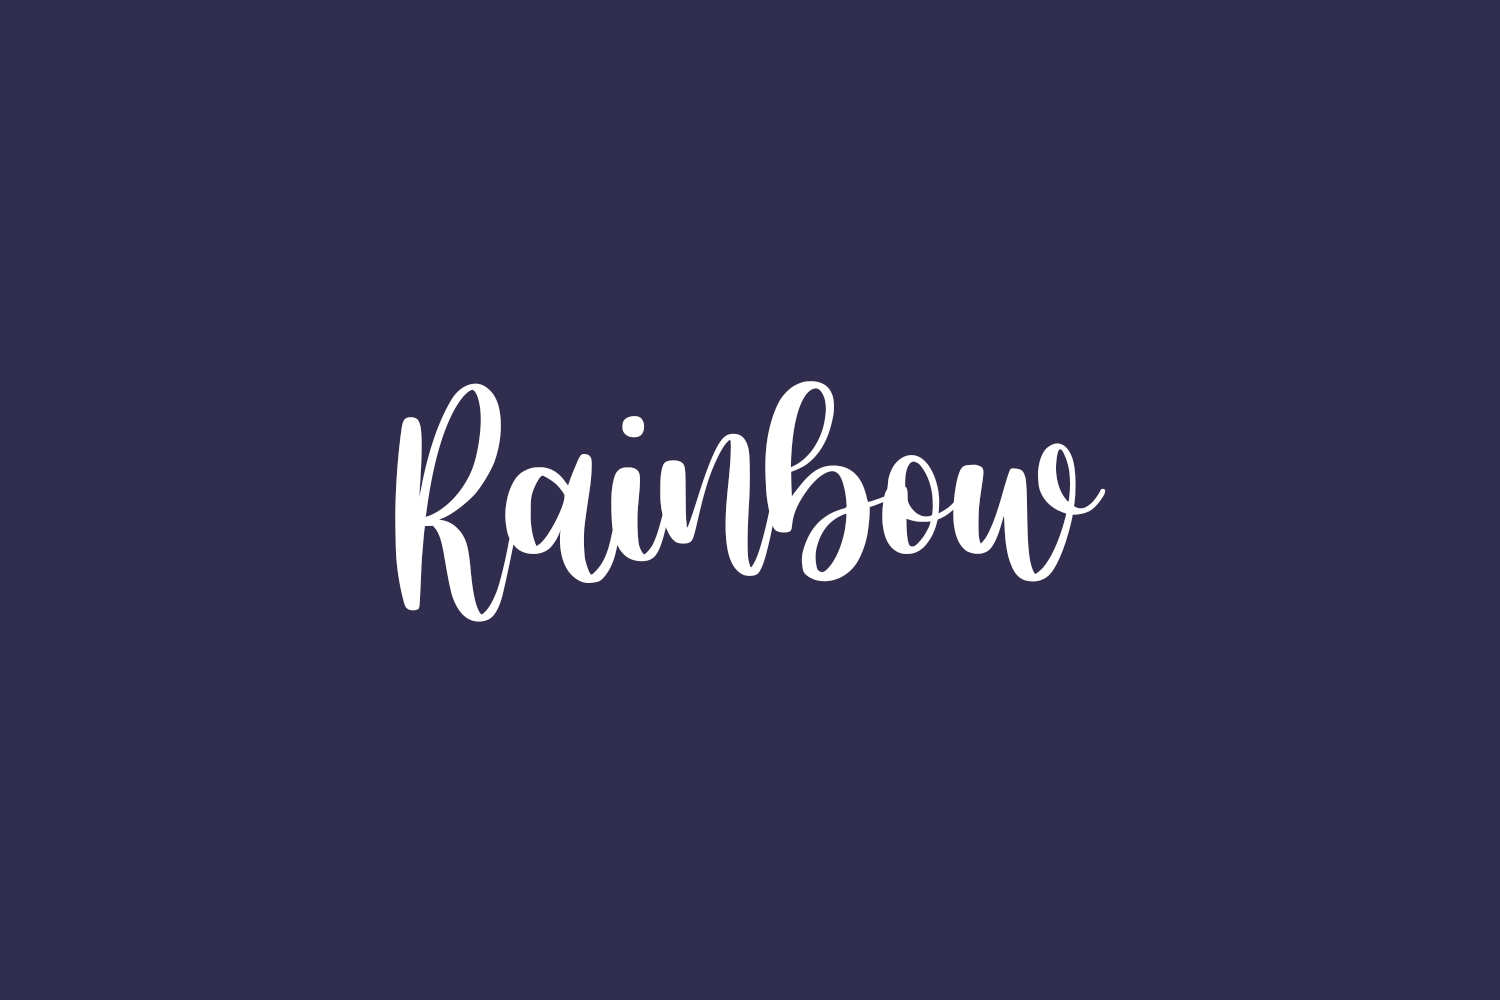 Rainbow Free Font